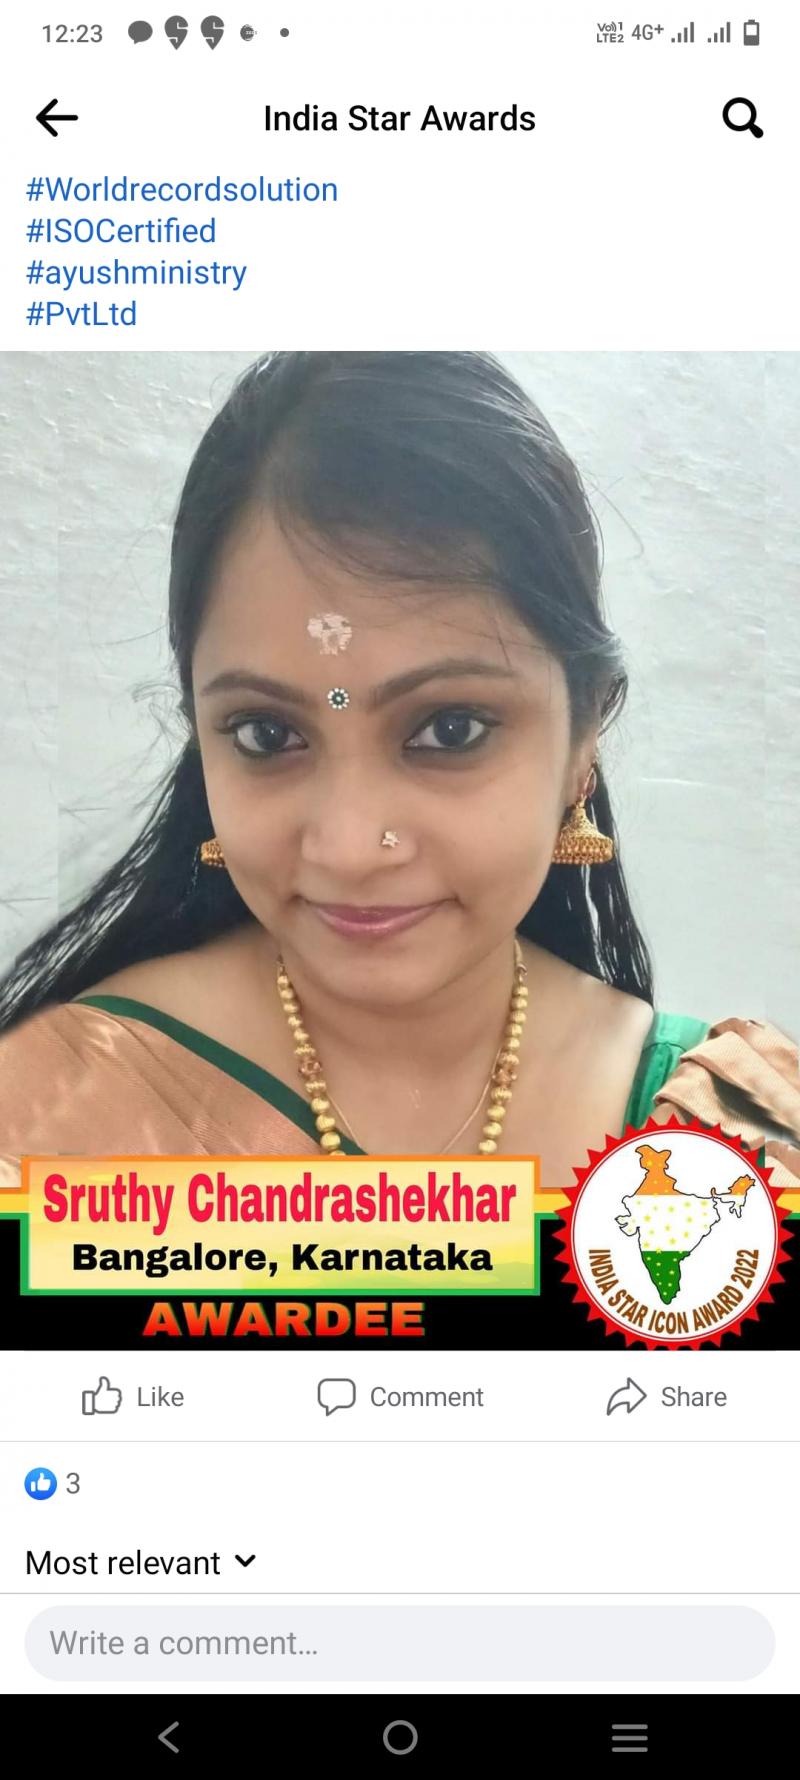 Sruthy Chandrasekhar